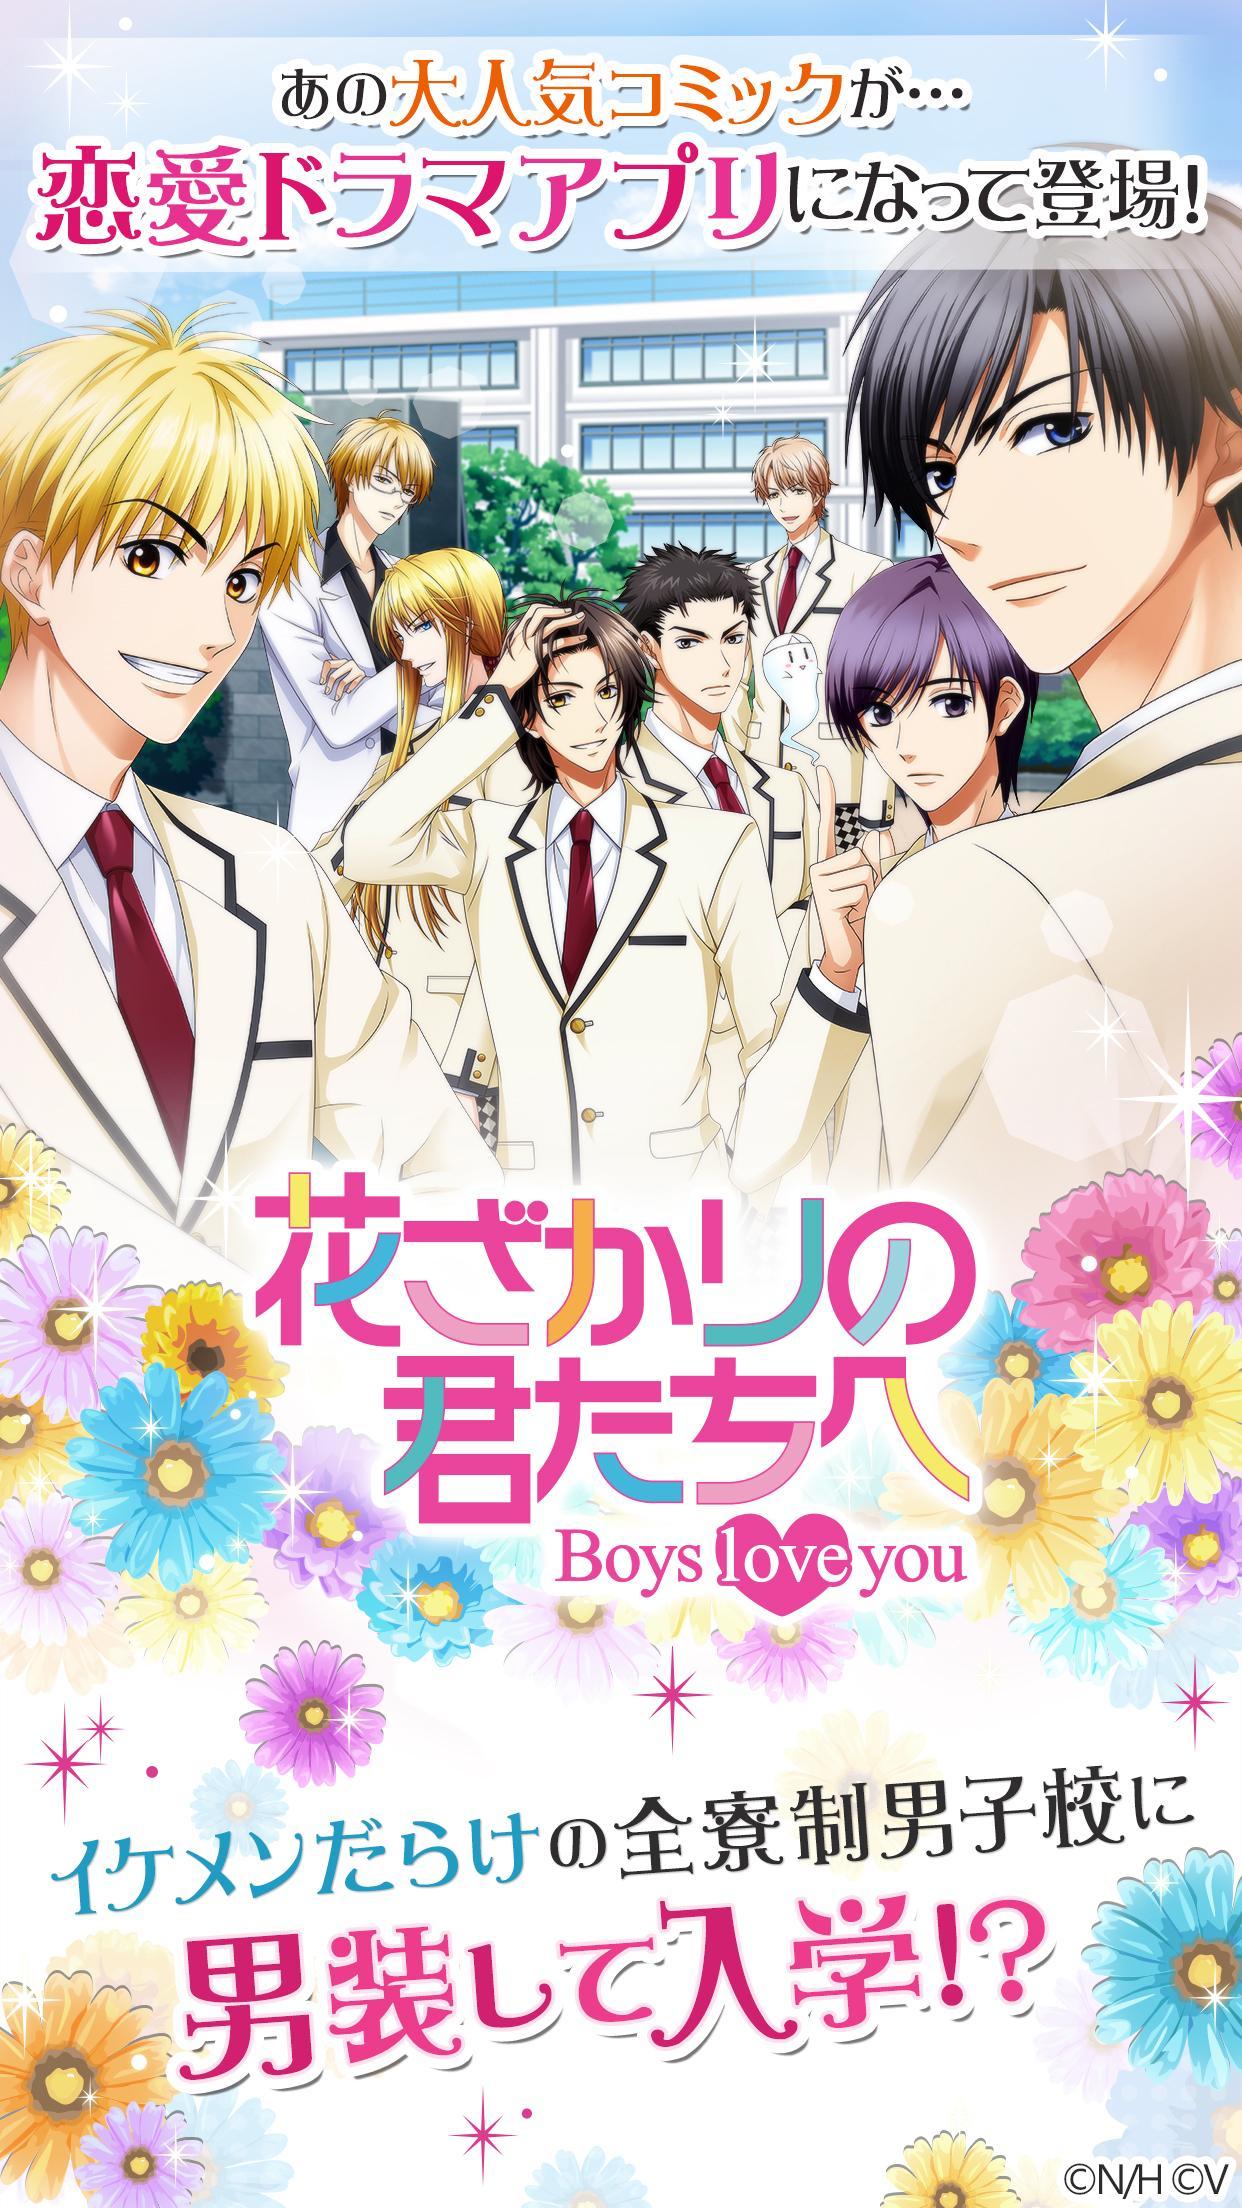 Screenshot 1 of Hanazakari no Kimitachi e ~ယောက်ျားလေးတွေ မင်းကို ချစ်တယ်~ 1.3.0